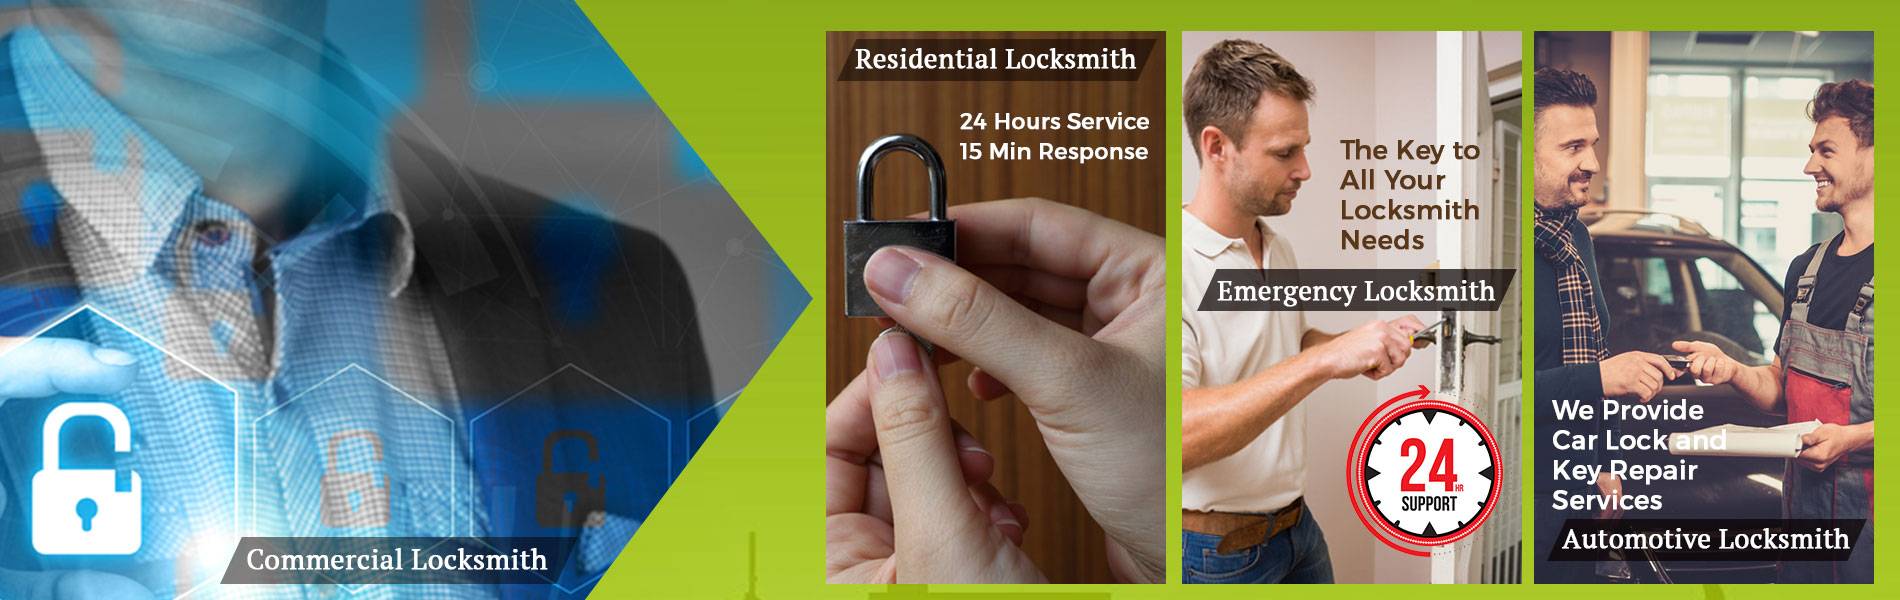 Key Copy and Locksmith Services San Jose CA, 2855 Story Rd